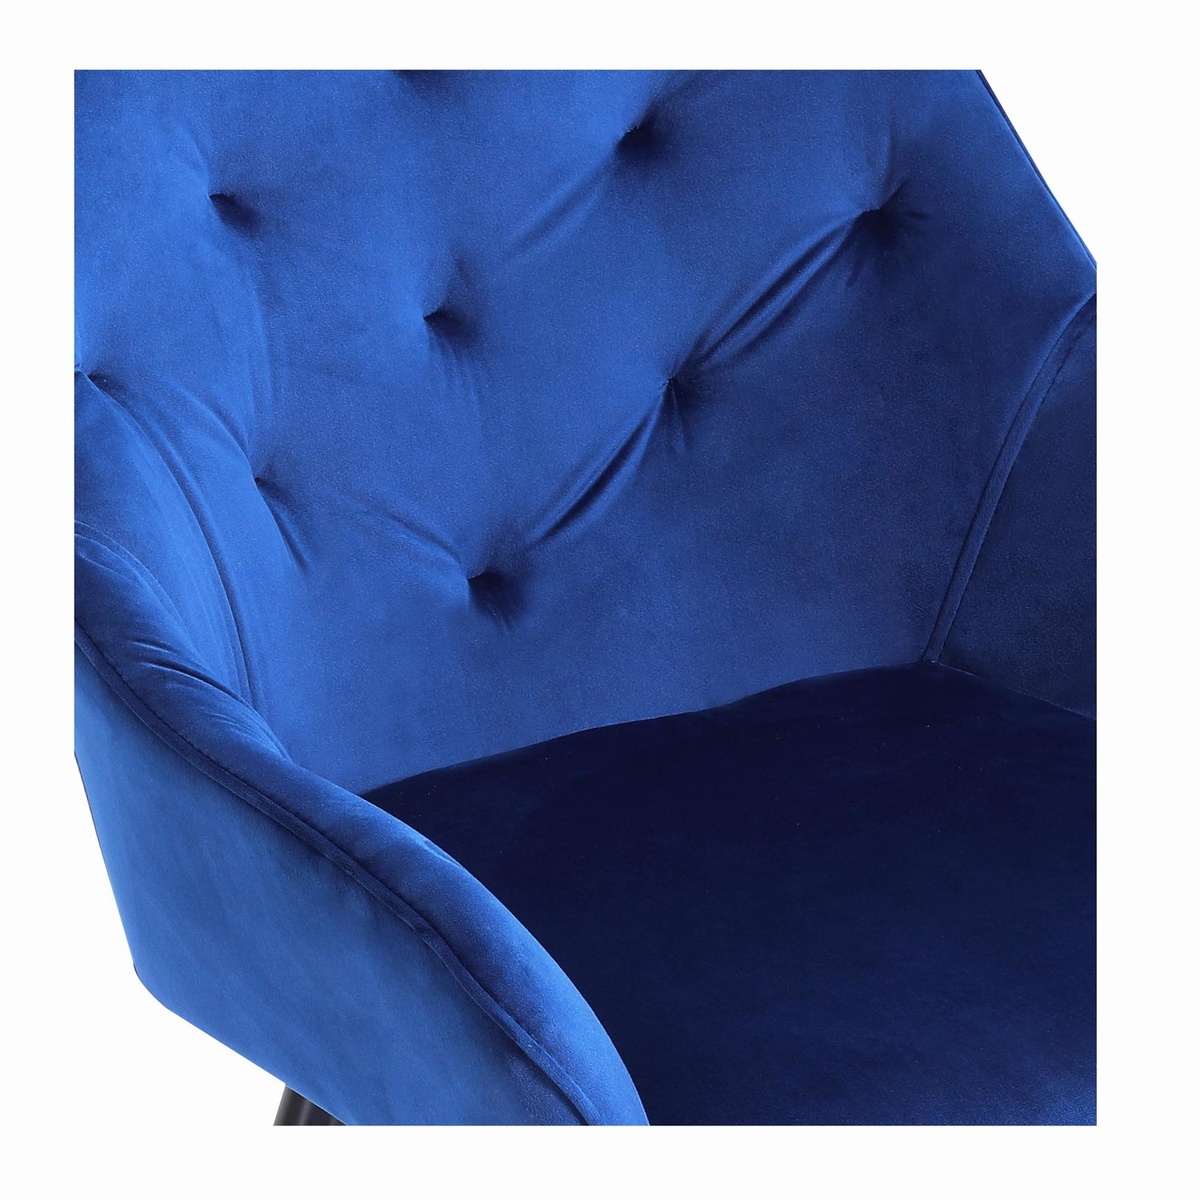 Кресло K487 Темно-синий/Черный K487 Altek mebli